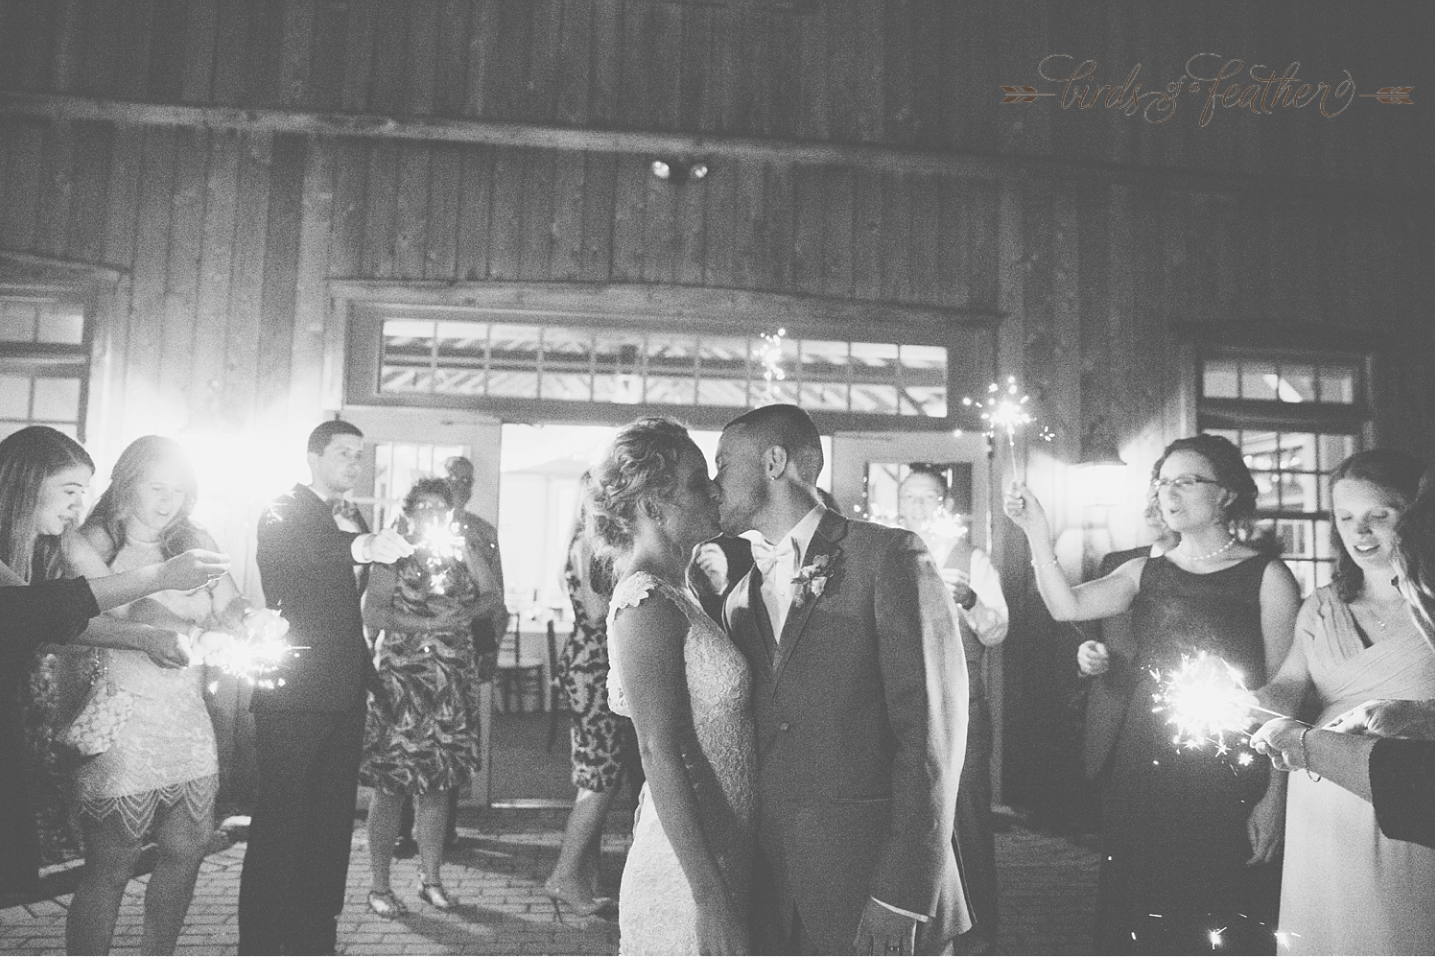 Glasbern Inn Wedding   Photographer – Fogelsville, Pa Wedding Photography by Birds of a Feather   Photography